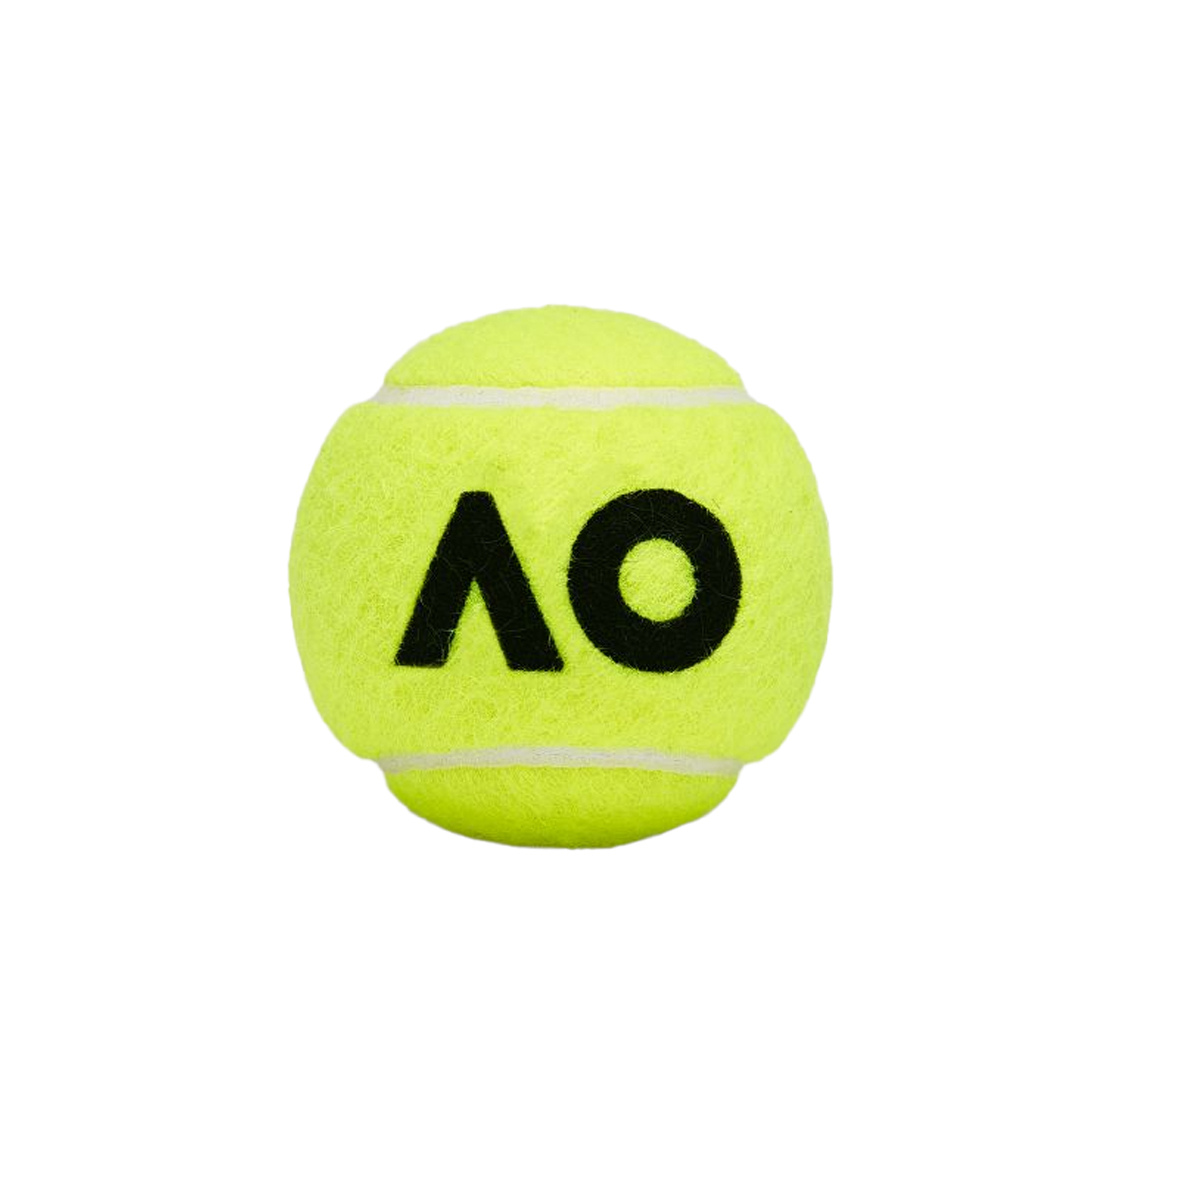 Tubo de pelotas Dunlop Australian Open X3,  image number null